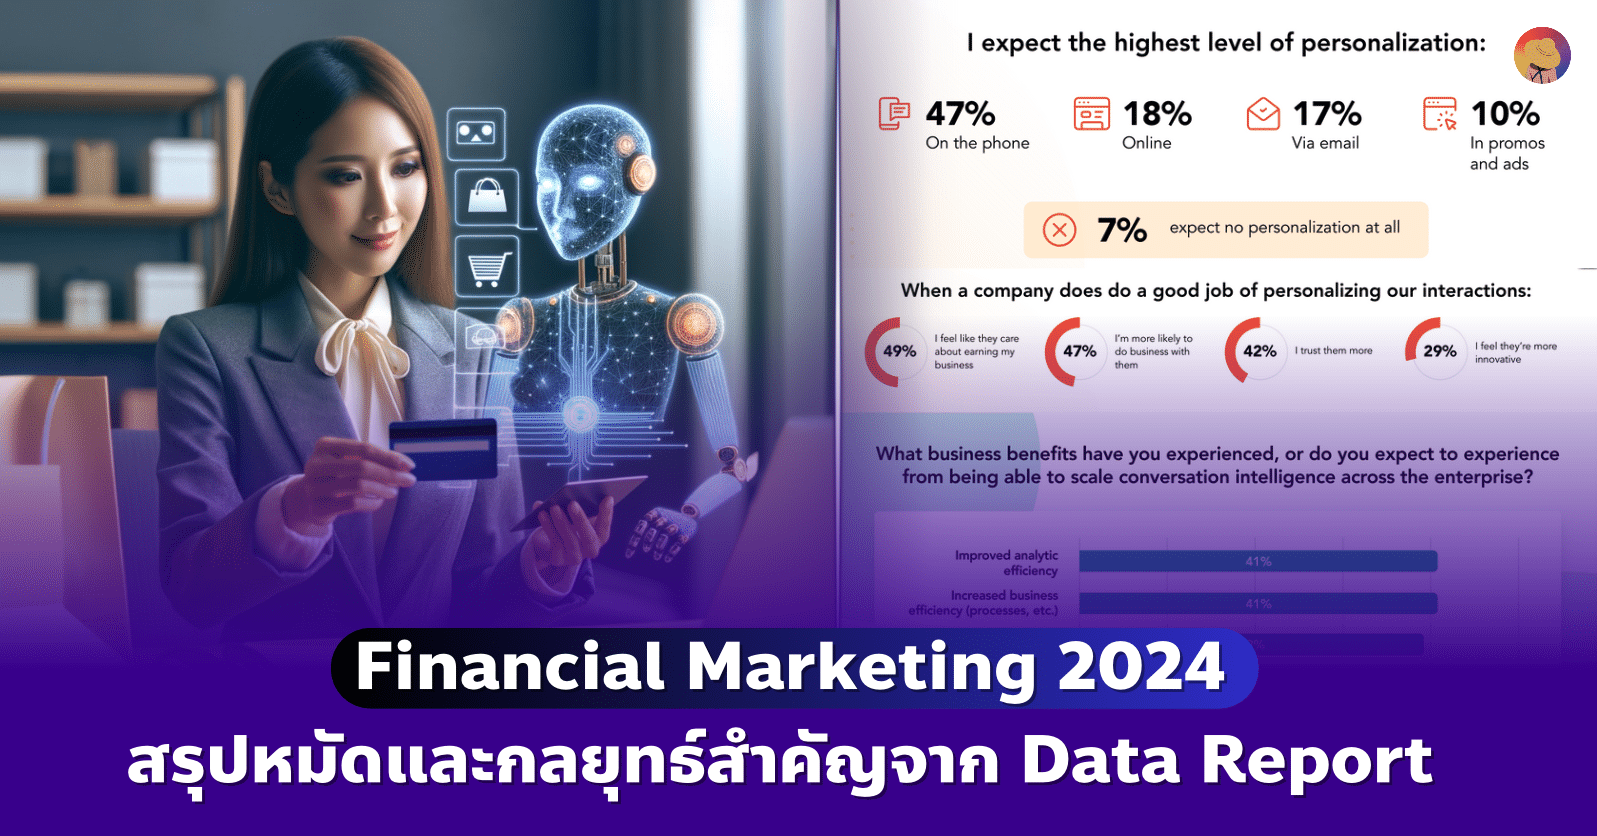 Data Report สรุปหมัดสำคัญของ Financial Marketing 2024 